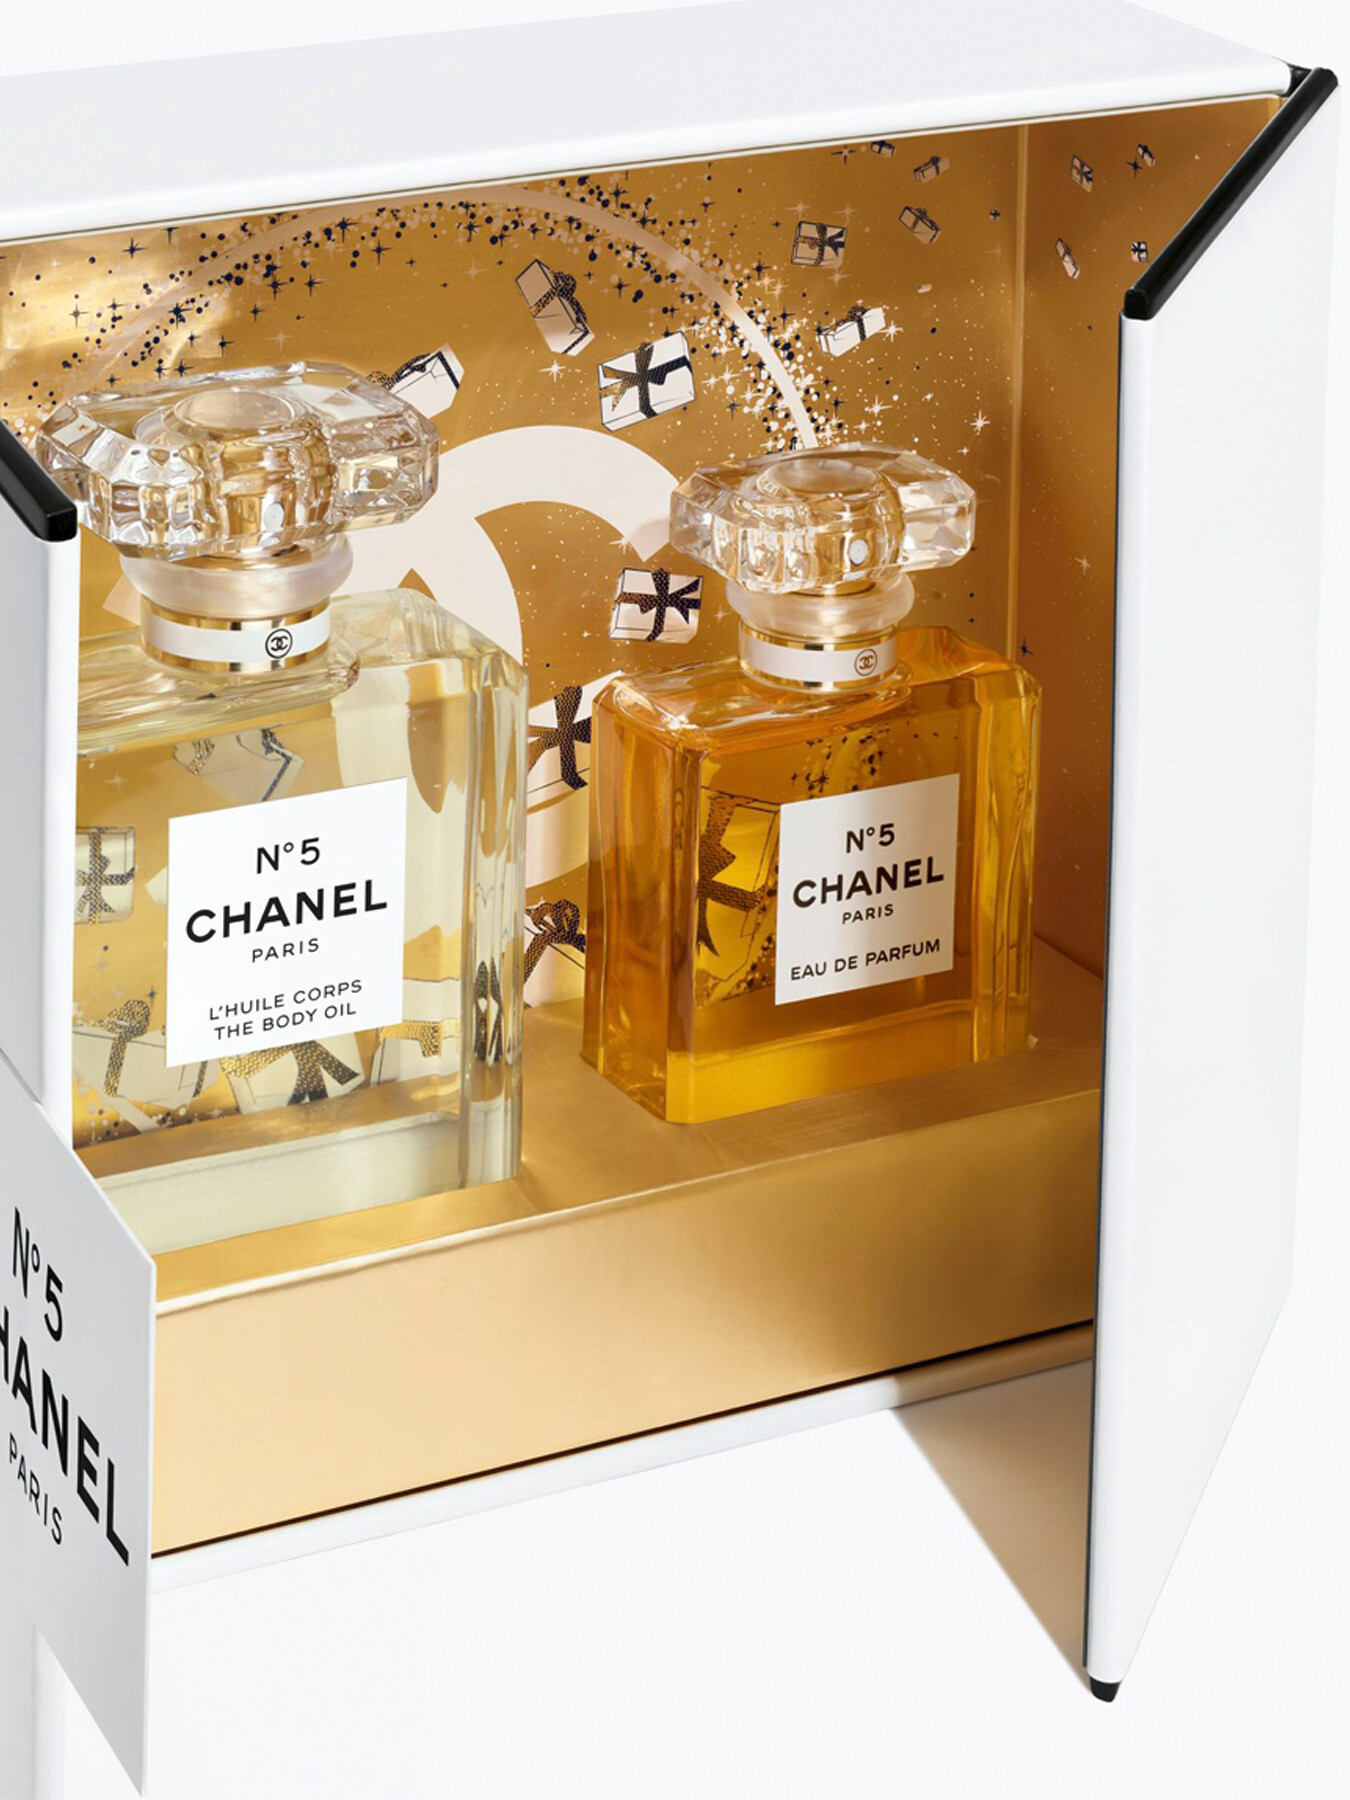 CHANEL Oil Body Fragrances for Women for sale